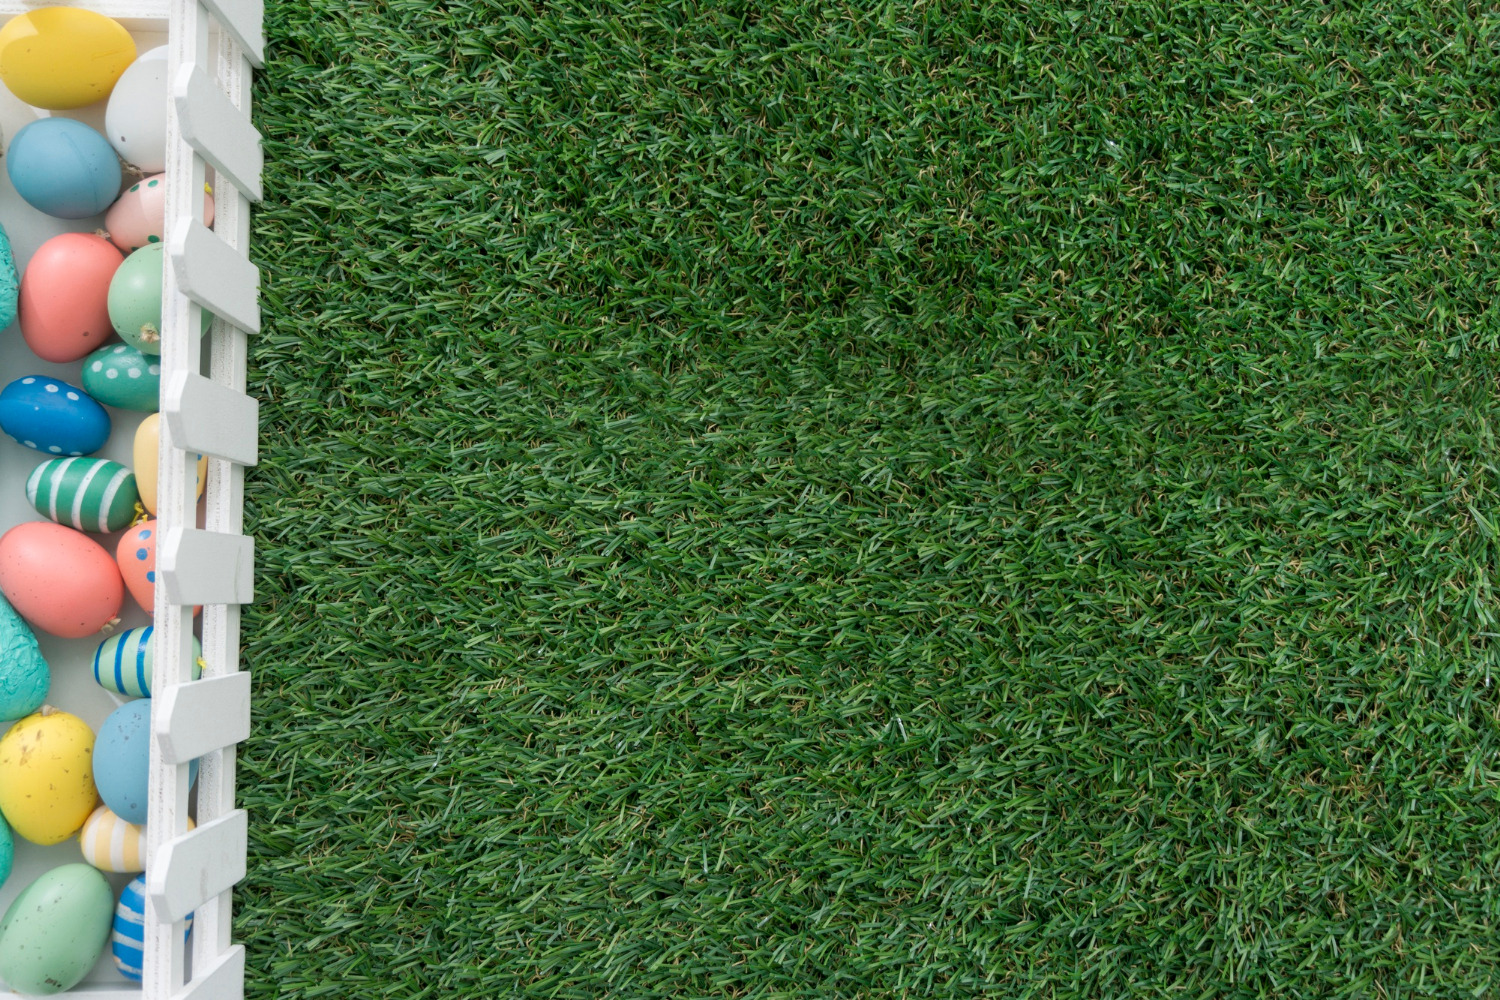 Grass carpet fixation services in Dubai